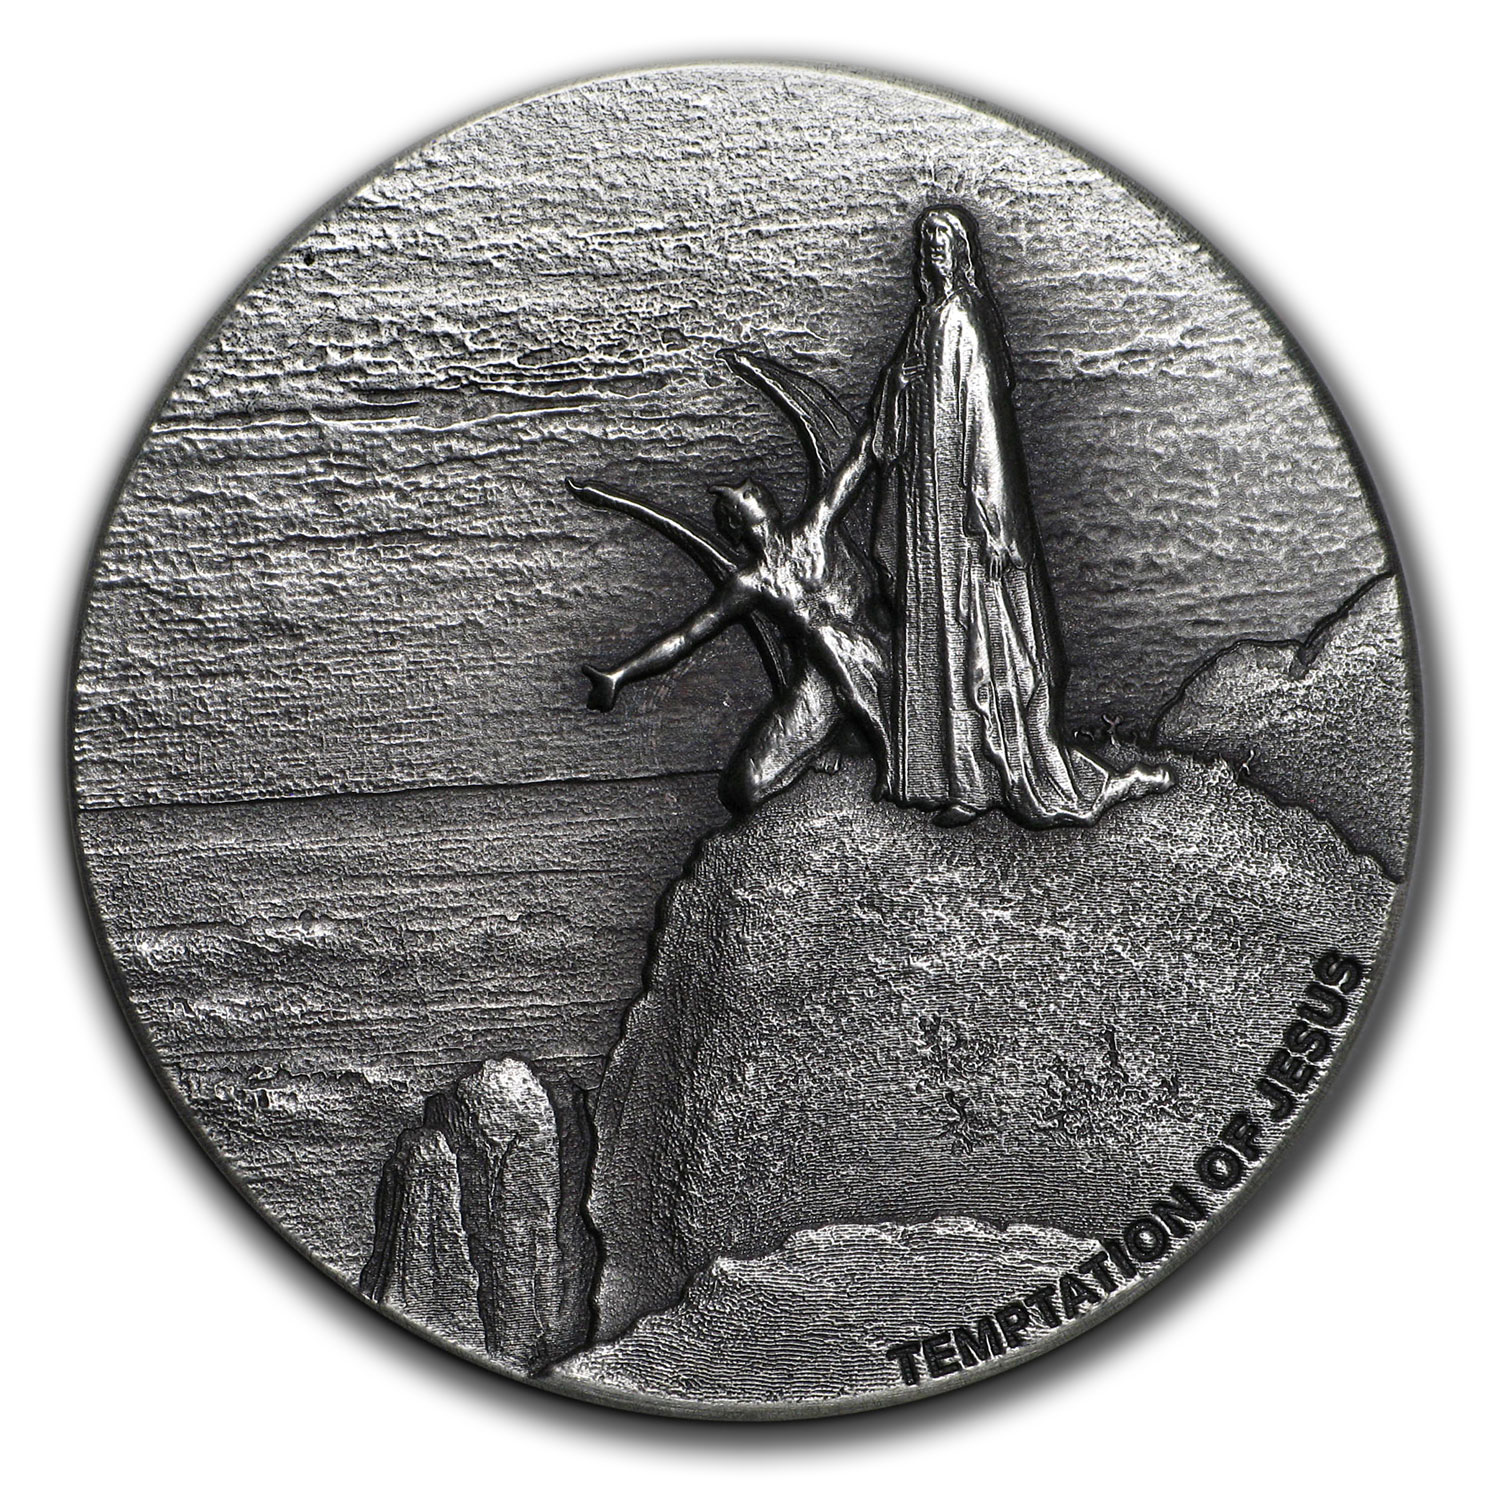 Buy 2018 2 oz Silver Coin - Biblical Series (Temptation of Jesus)